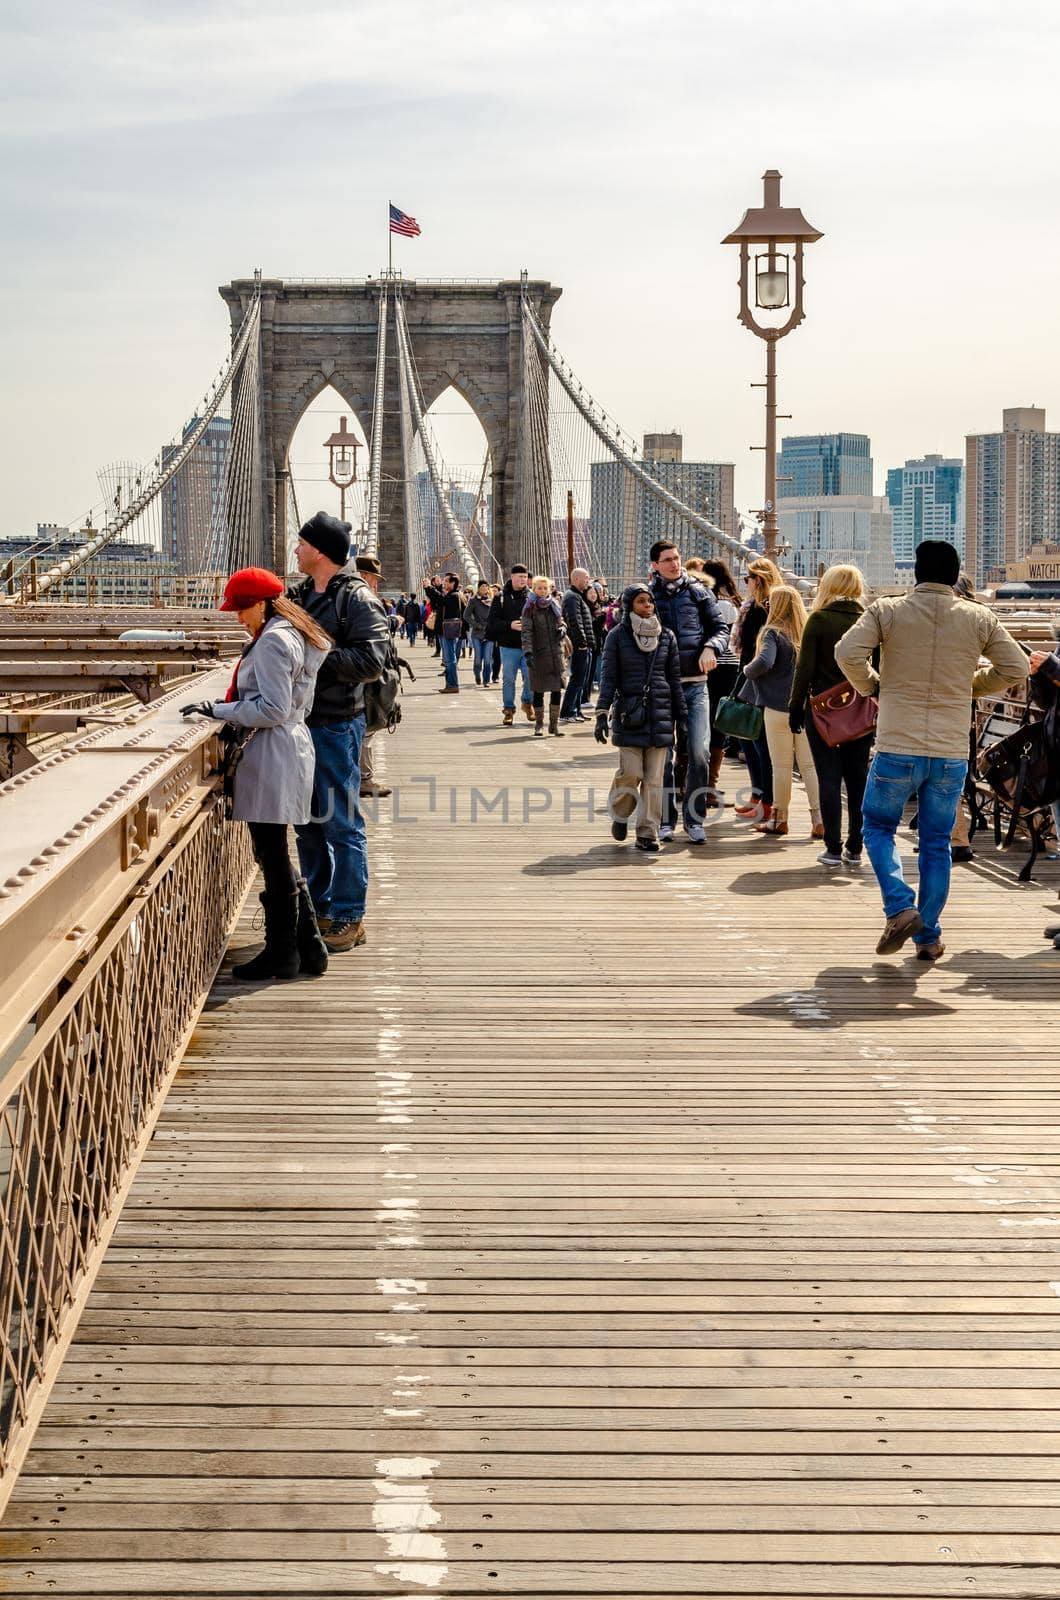 Brooklyn Bridge New York City with tourists walking on the Bridge by bildgigant